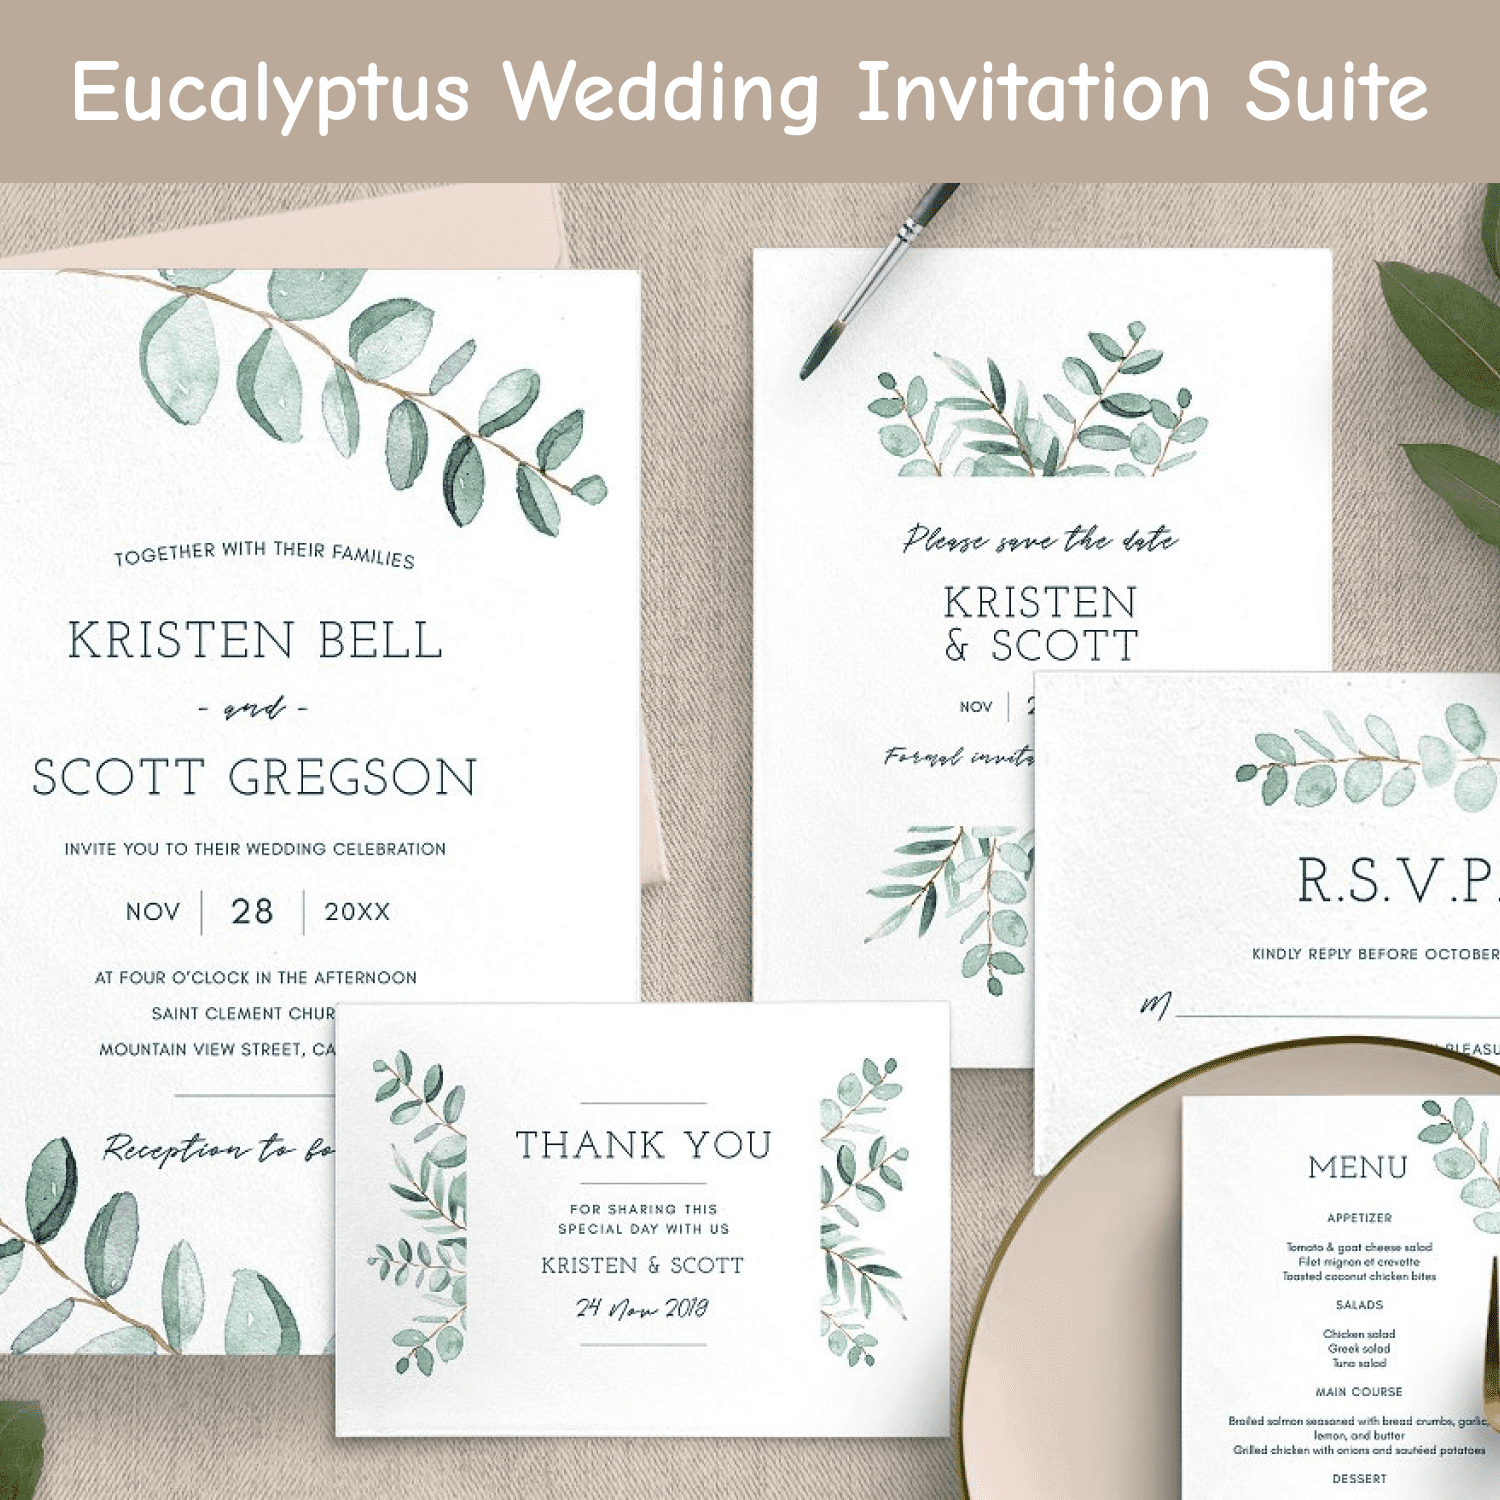 Eucalyptus Wedding Invitation Suite cover image.